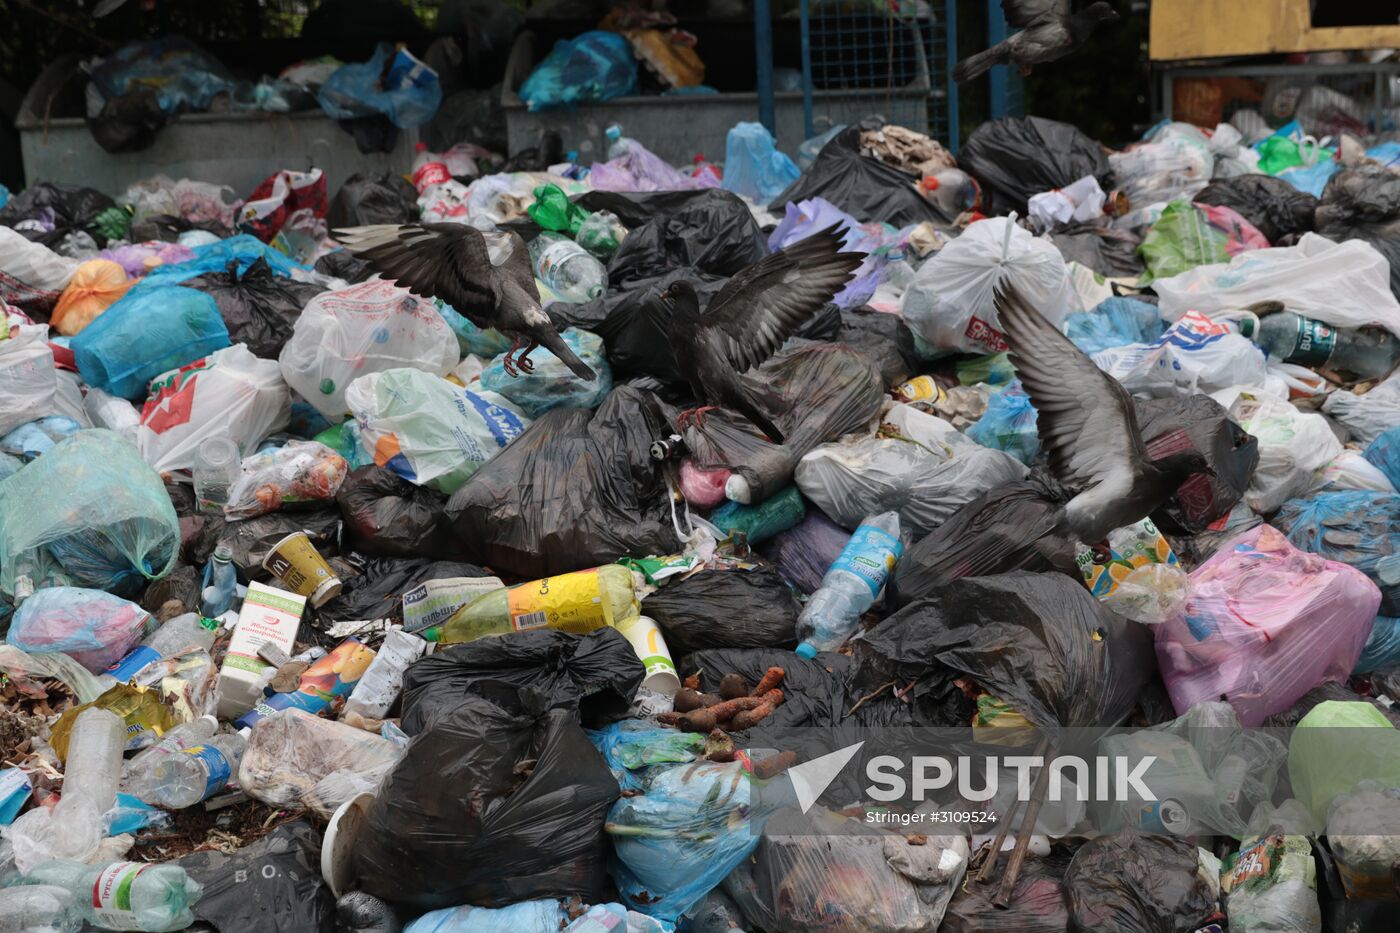 Undisposed waste in Lviv